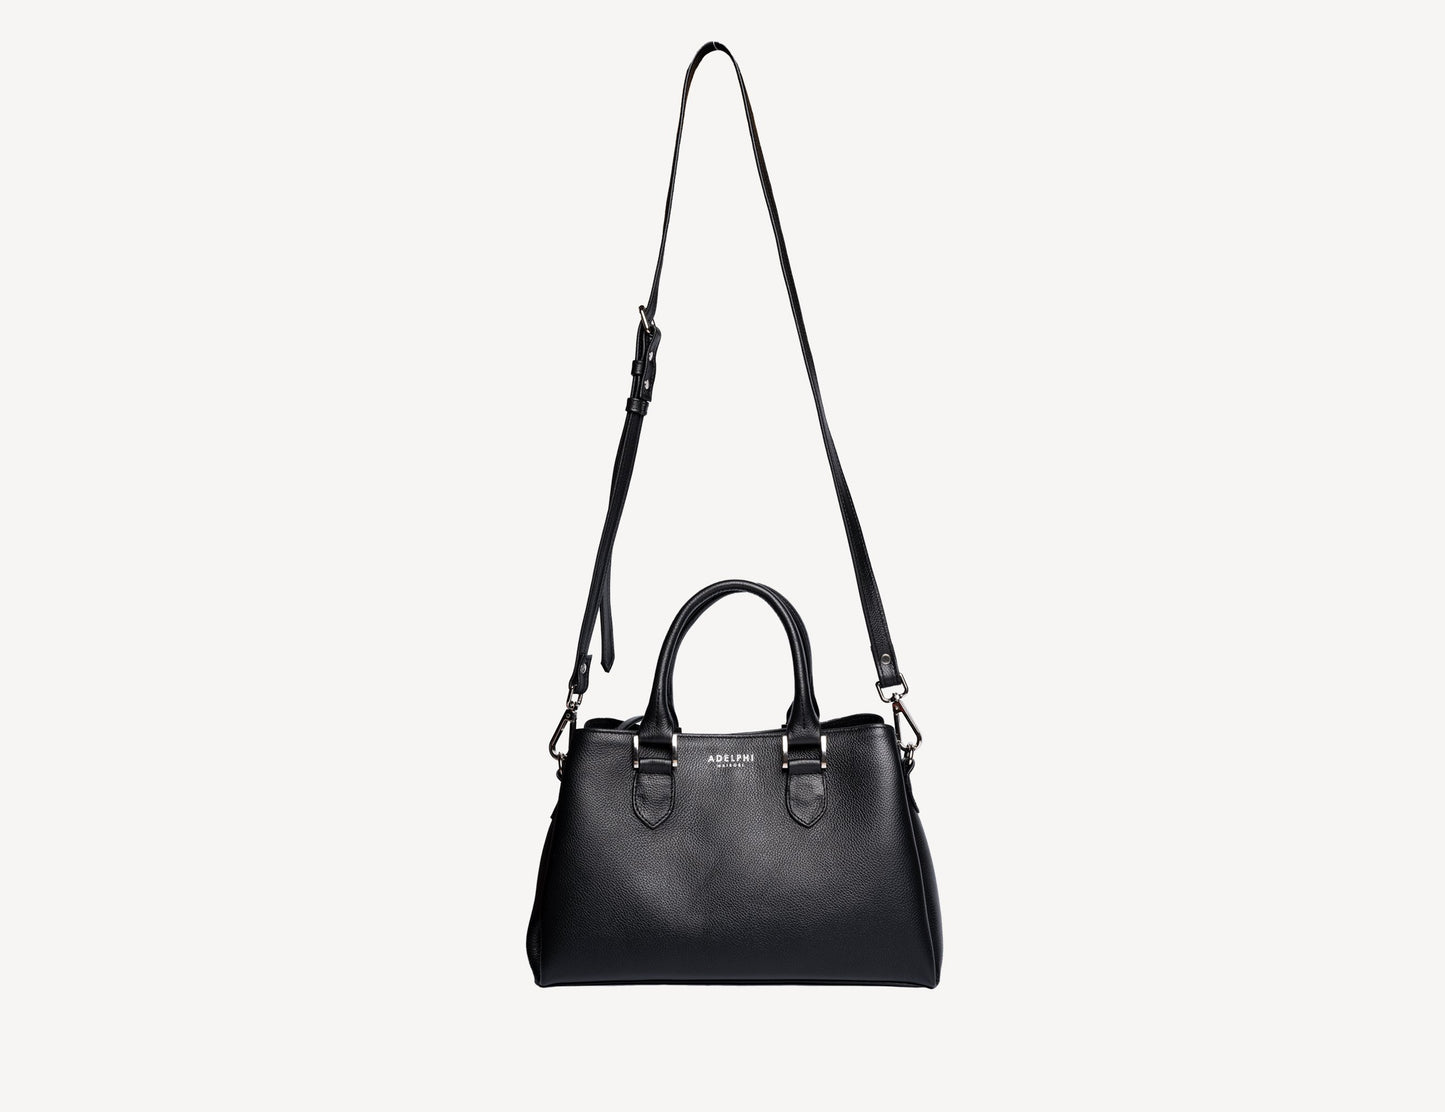 Classic satchel bag in Black by Adelphi